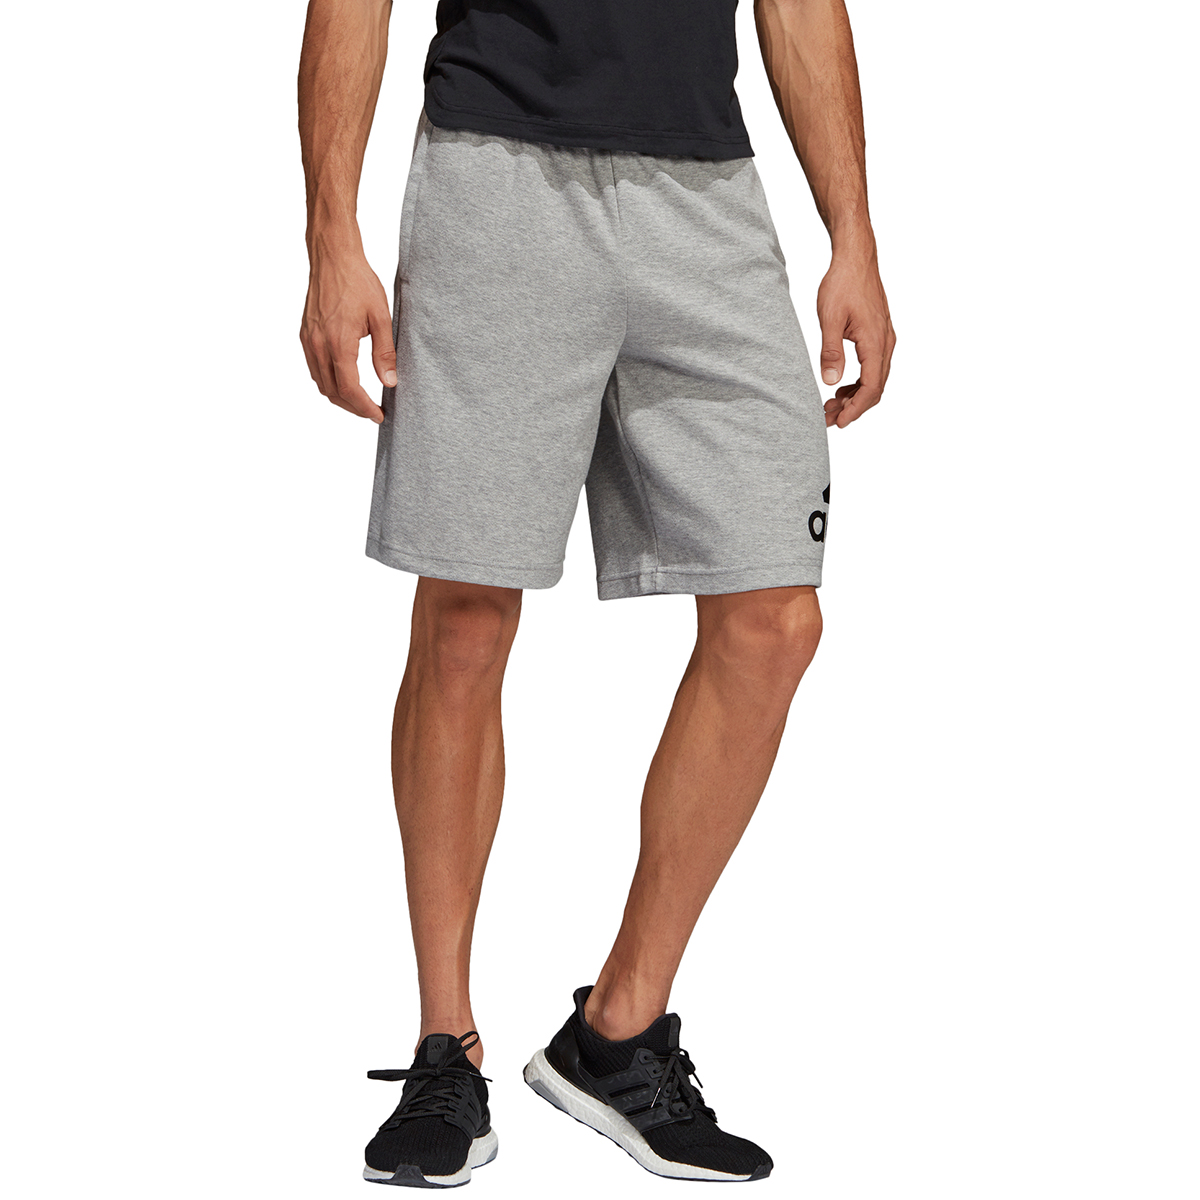 Adidas Men's Single Jersey Shorts | eBay